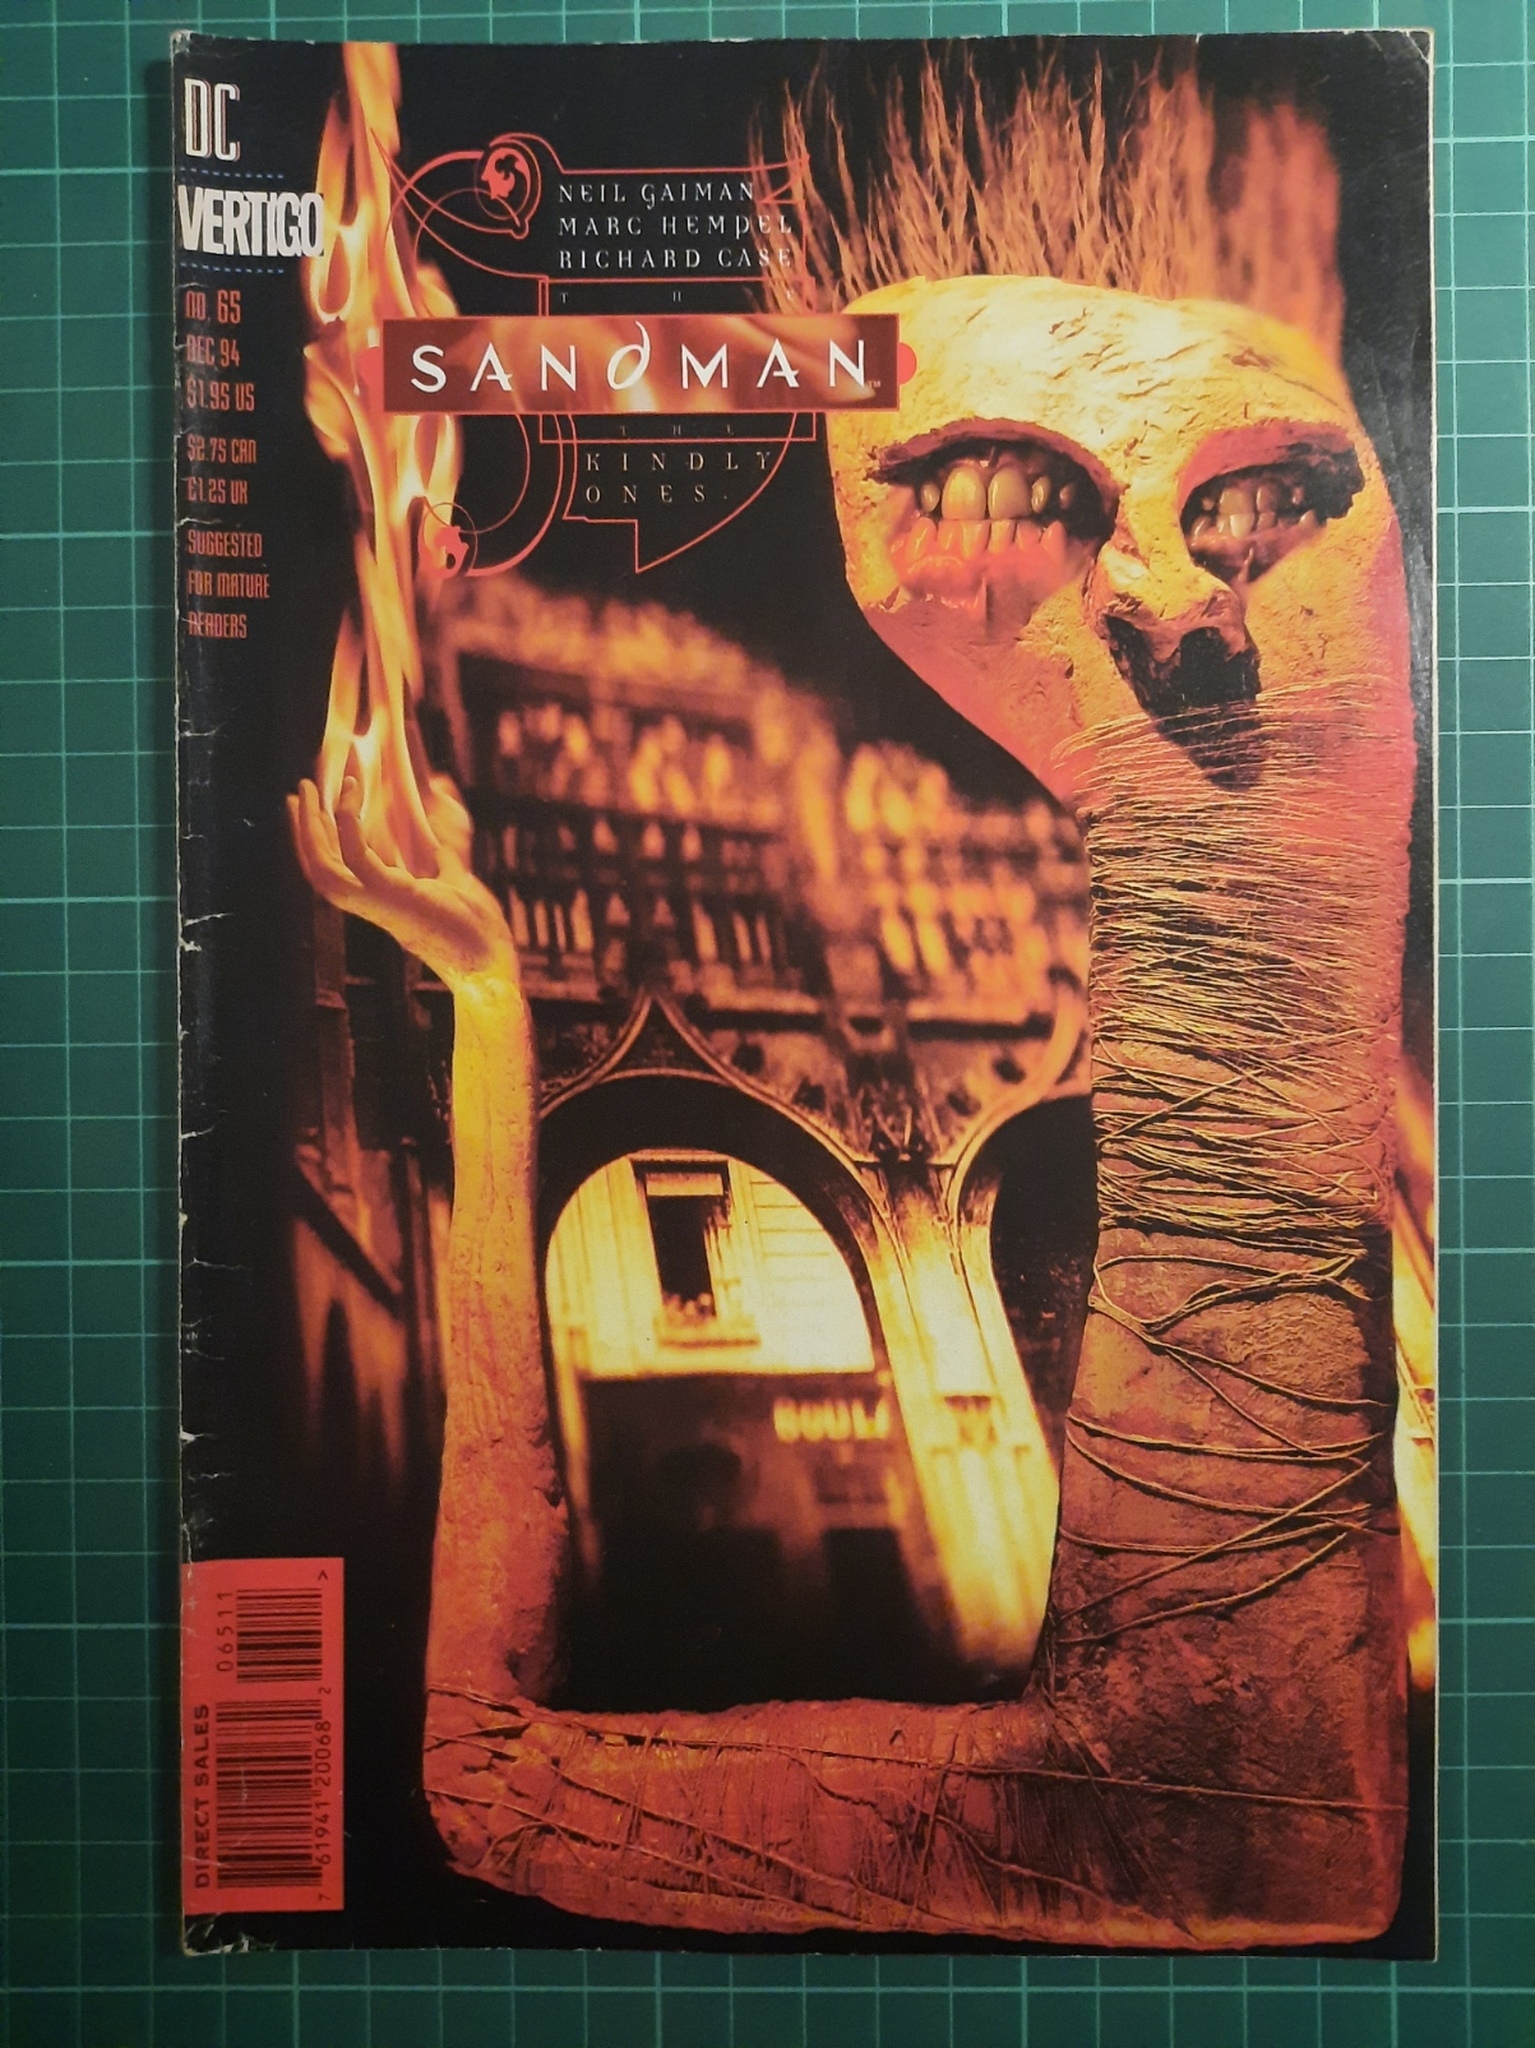 The Sandman #65